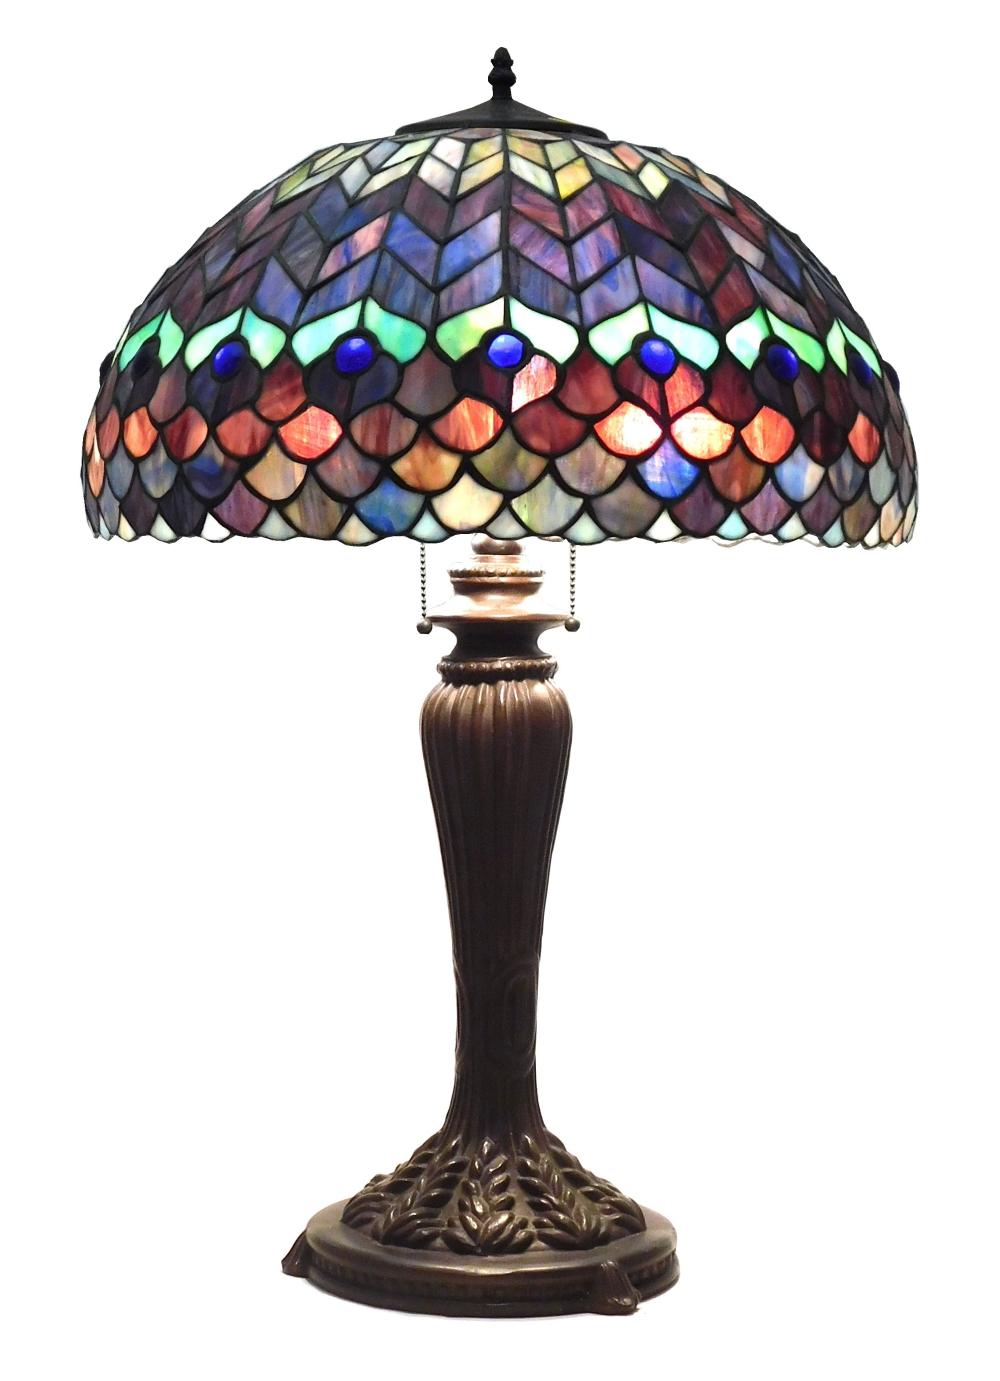 LAMP LEADED GLASS TABLE LAMP  2e2c74